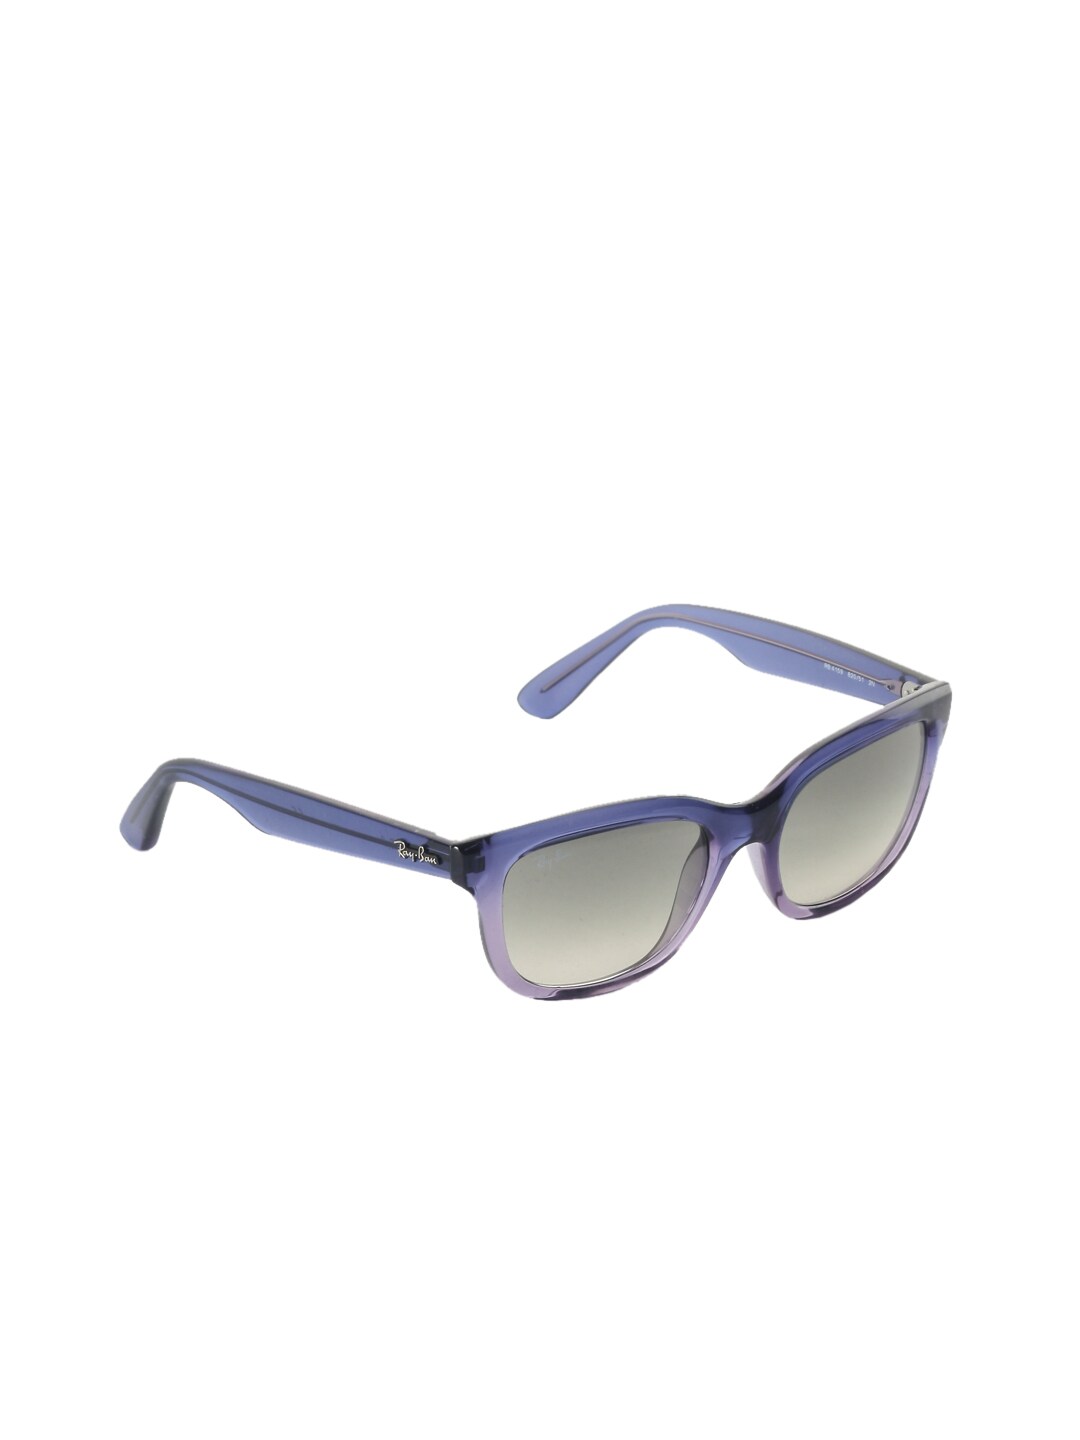 Ray-Ban Unisex High Street Purple Sunglasses